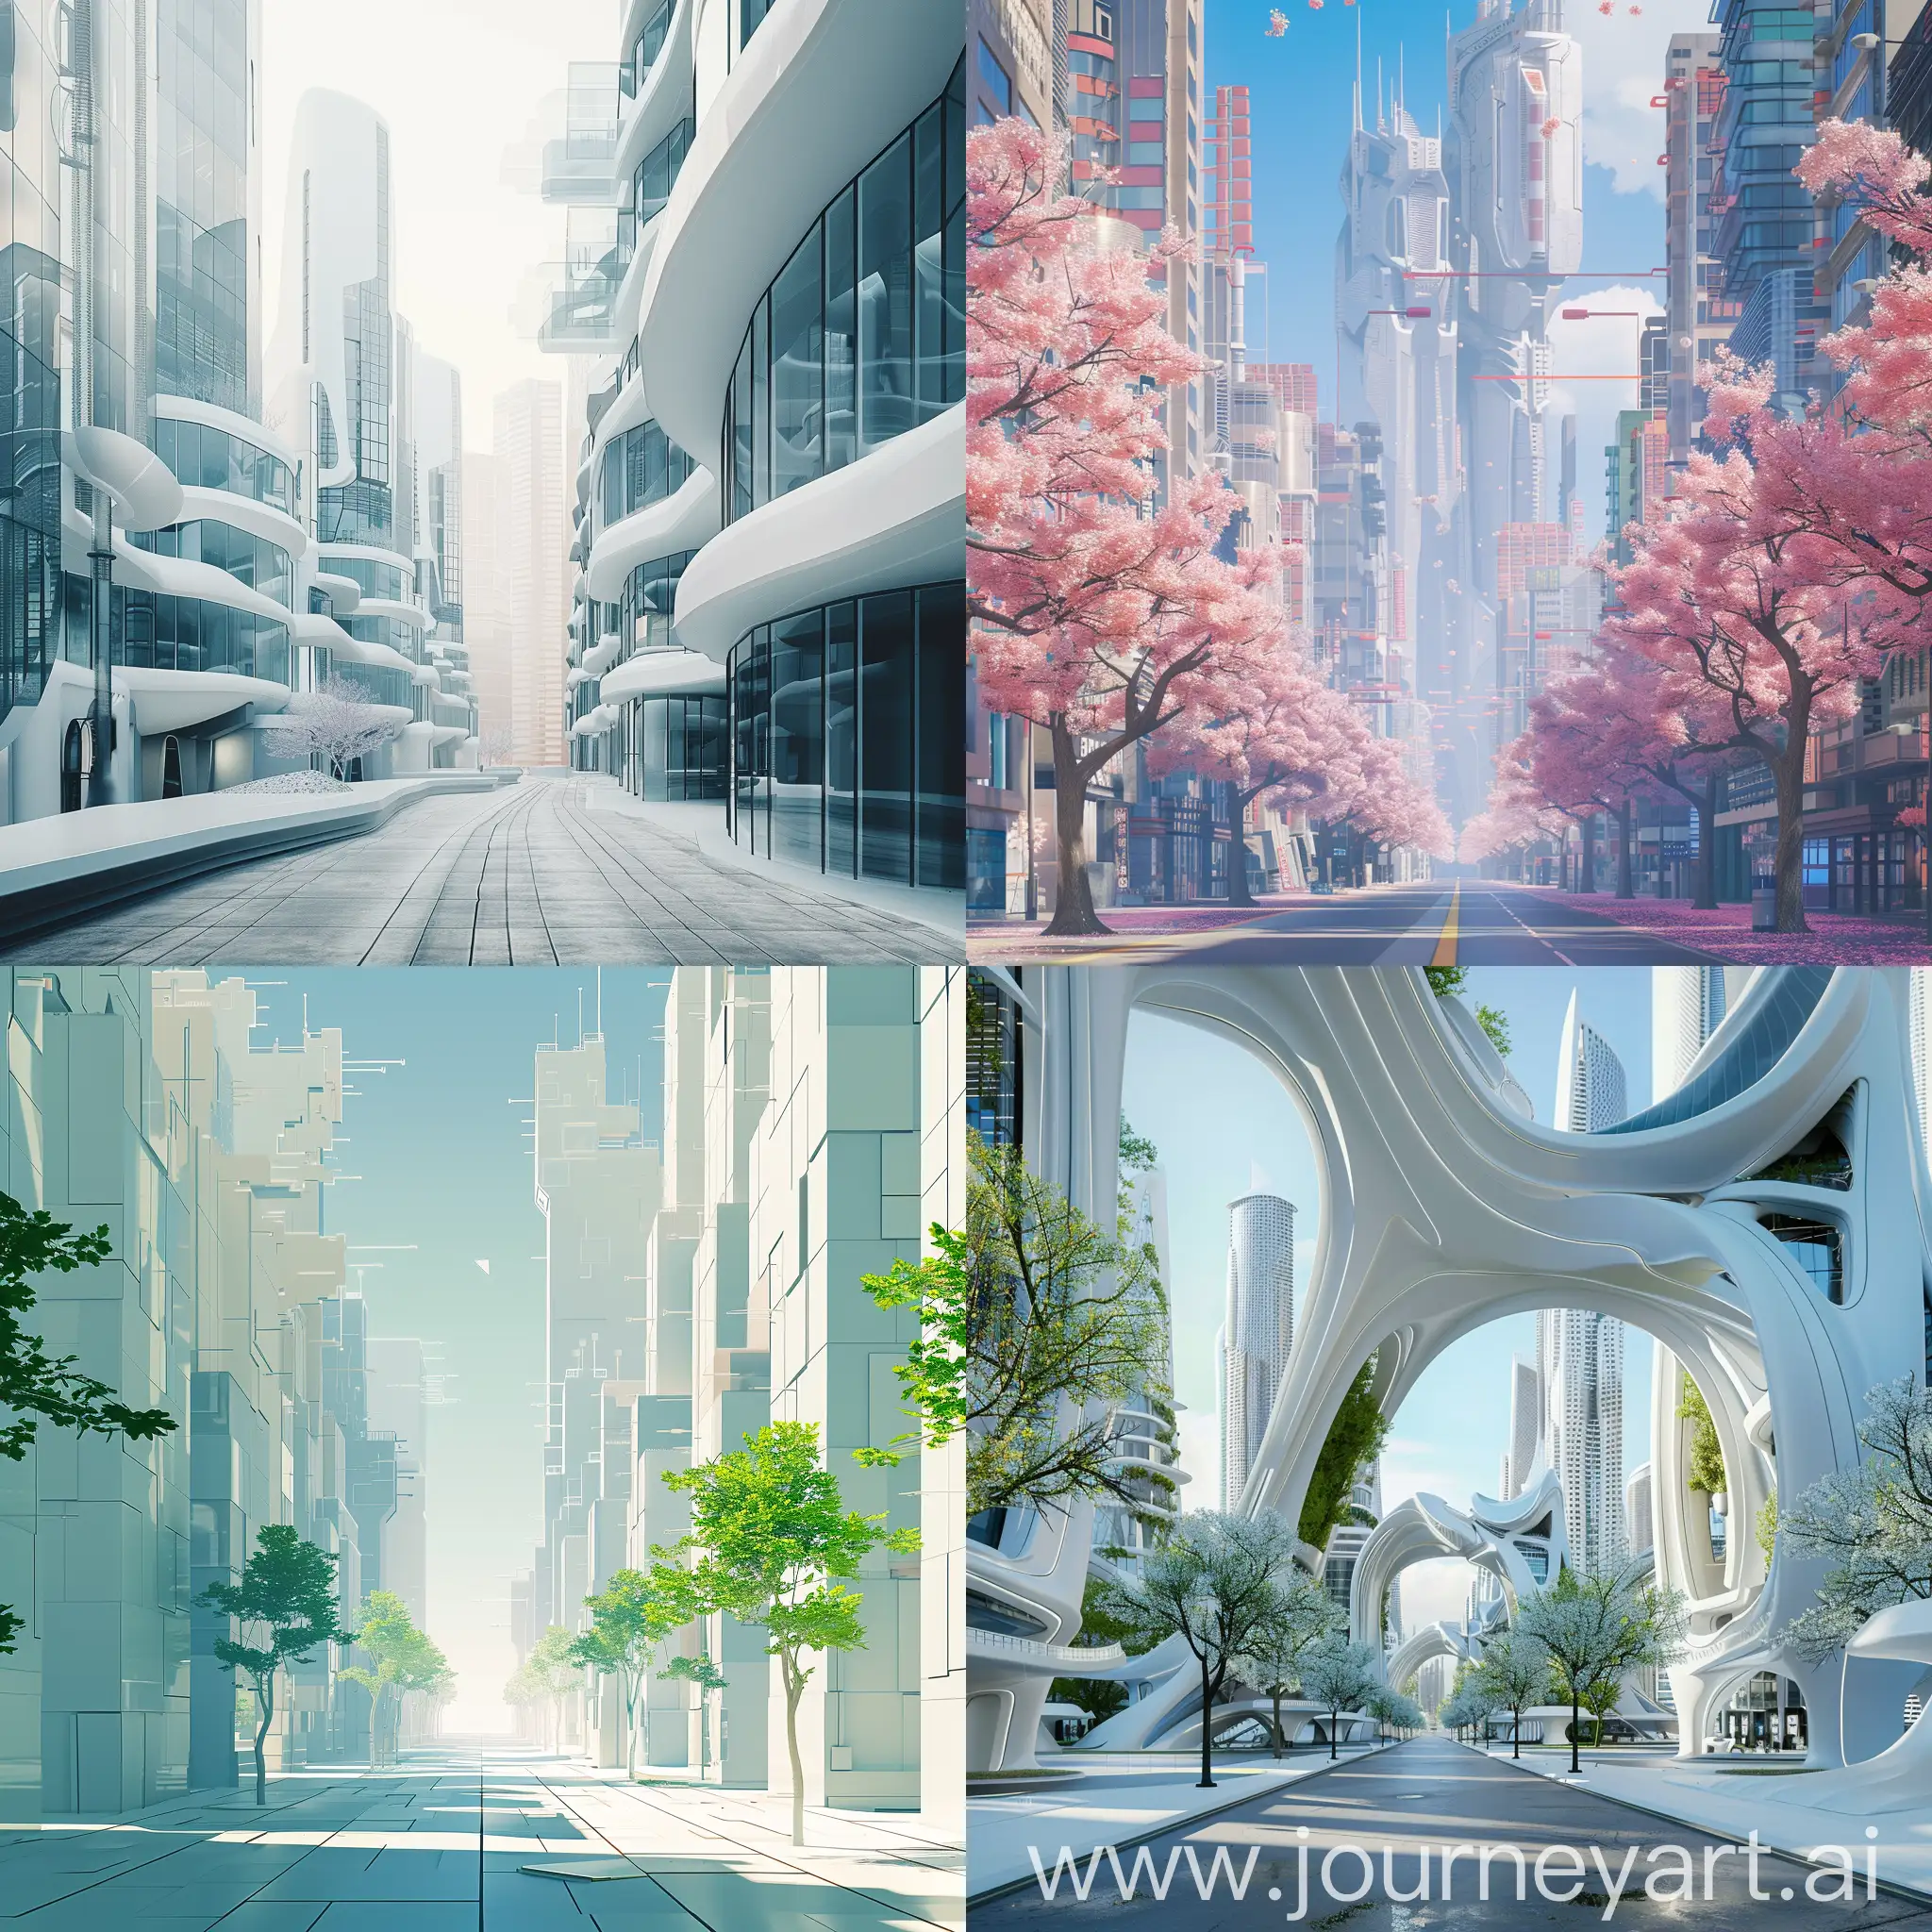 Surreal-Futuristic-Cityscape-Minimalist-Architecture-and-Spring-Vibes